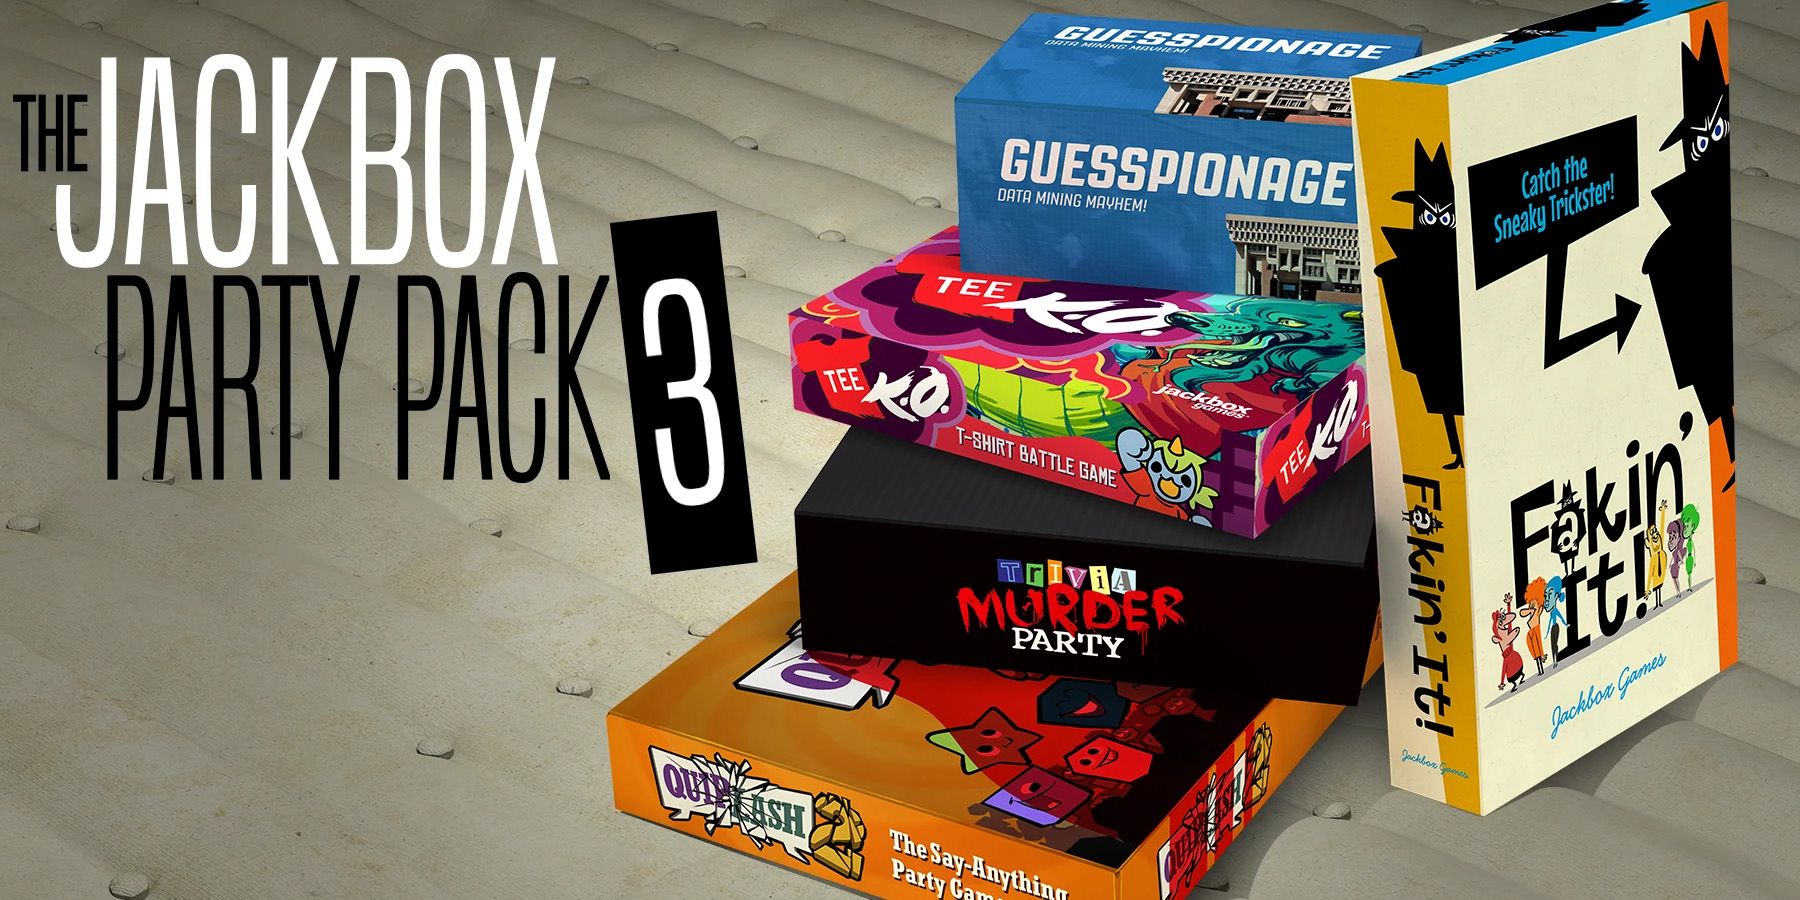 The Jackbox Party Box 3 